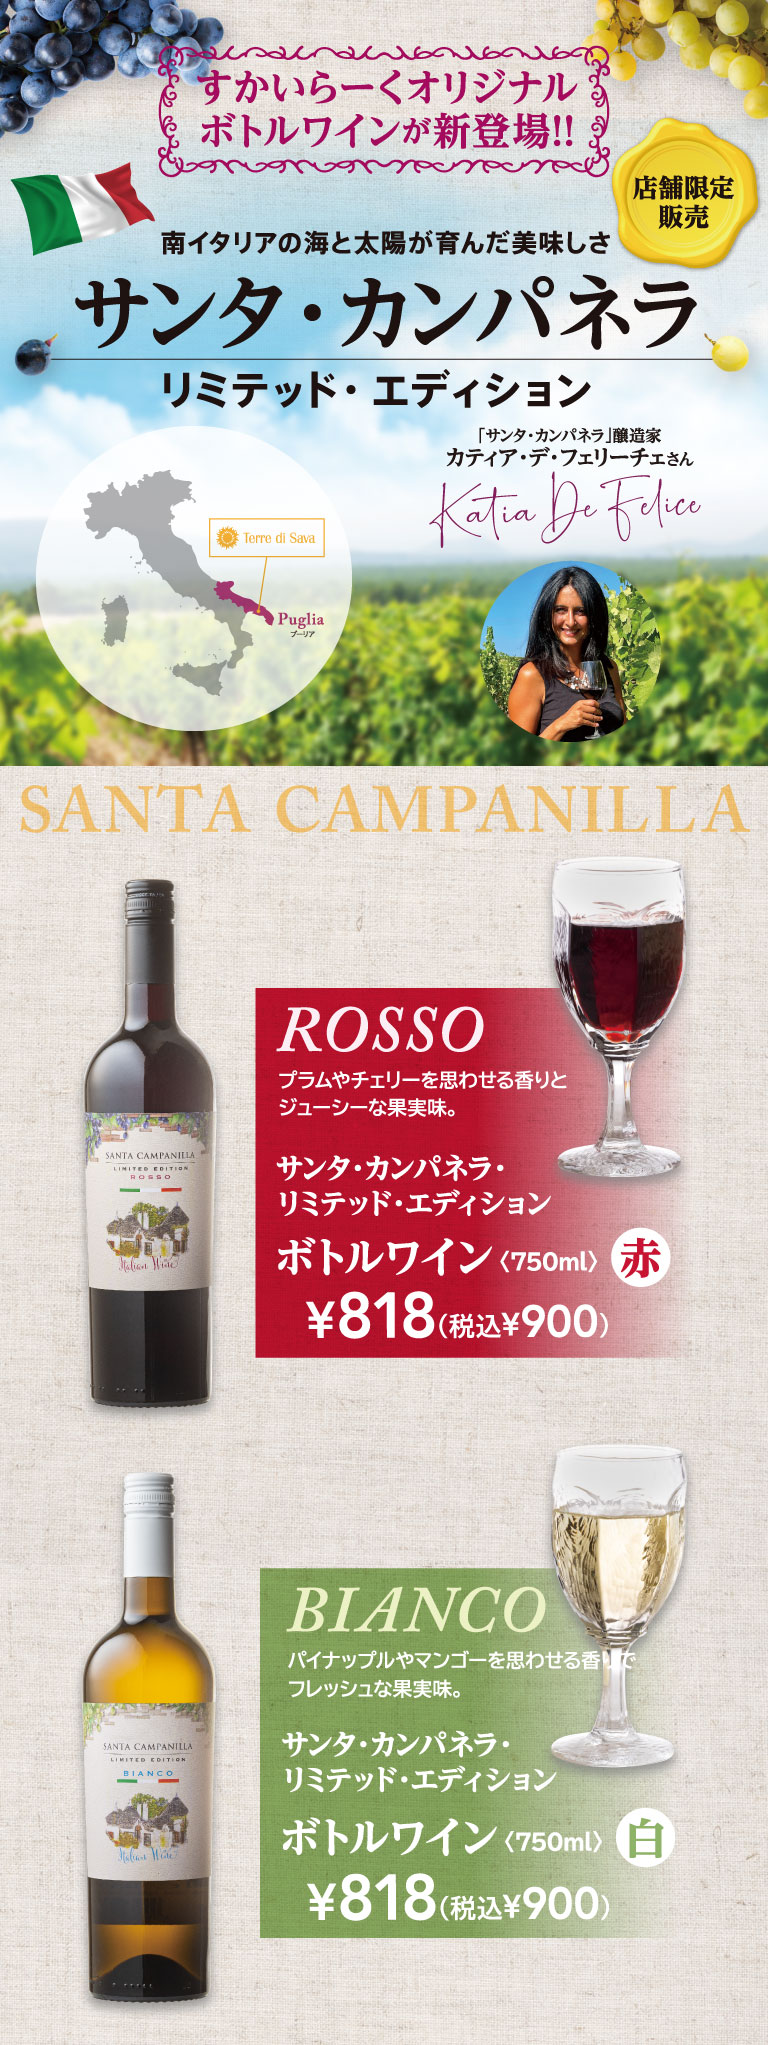 Santa Campanella Limited Edition Bottle Wine Red White Skylark（すかいらーく）Original